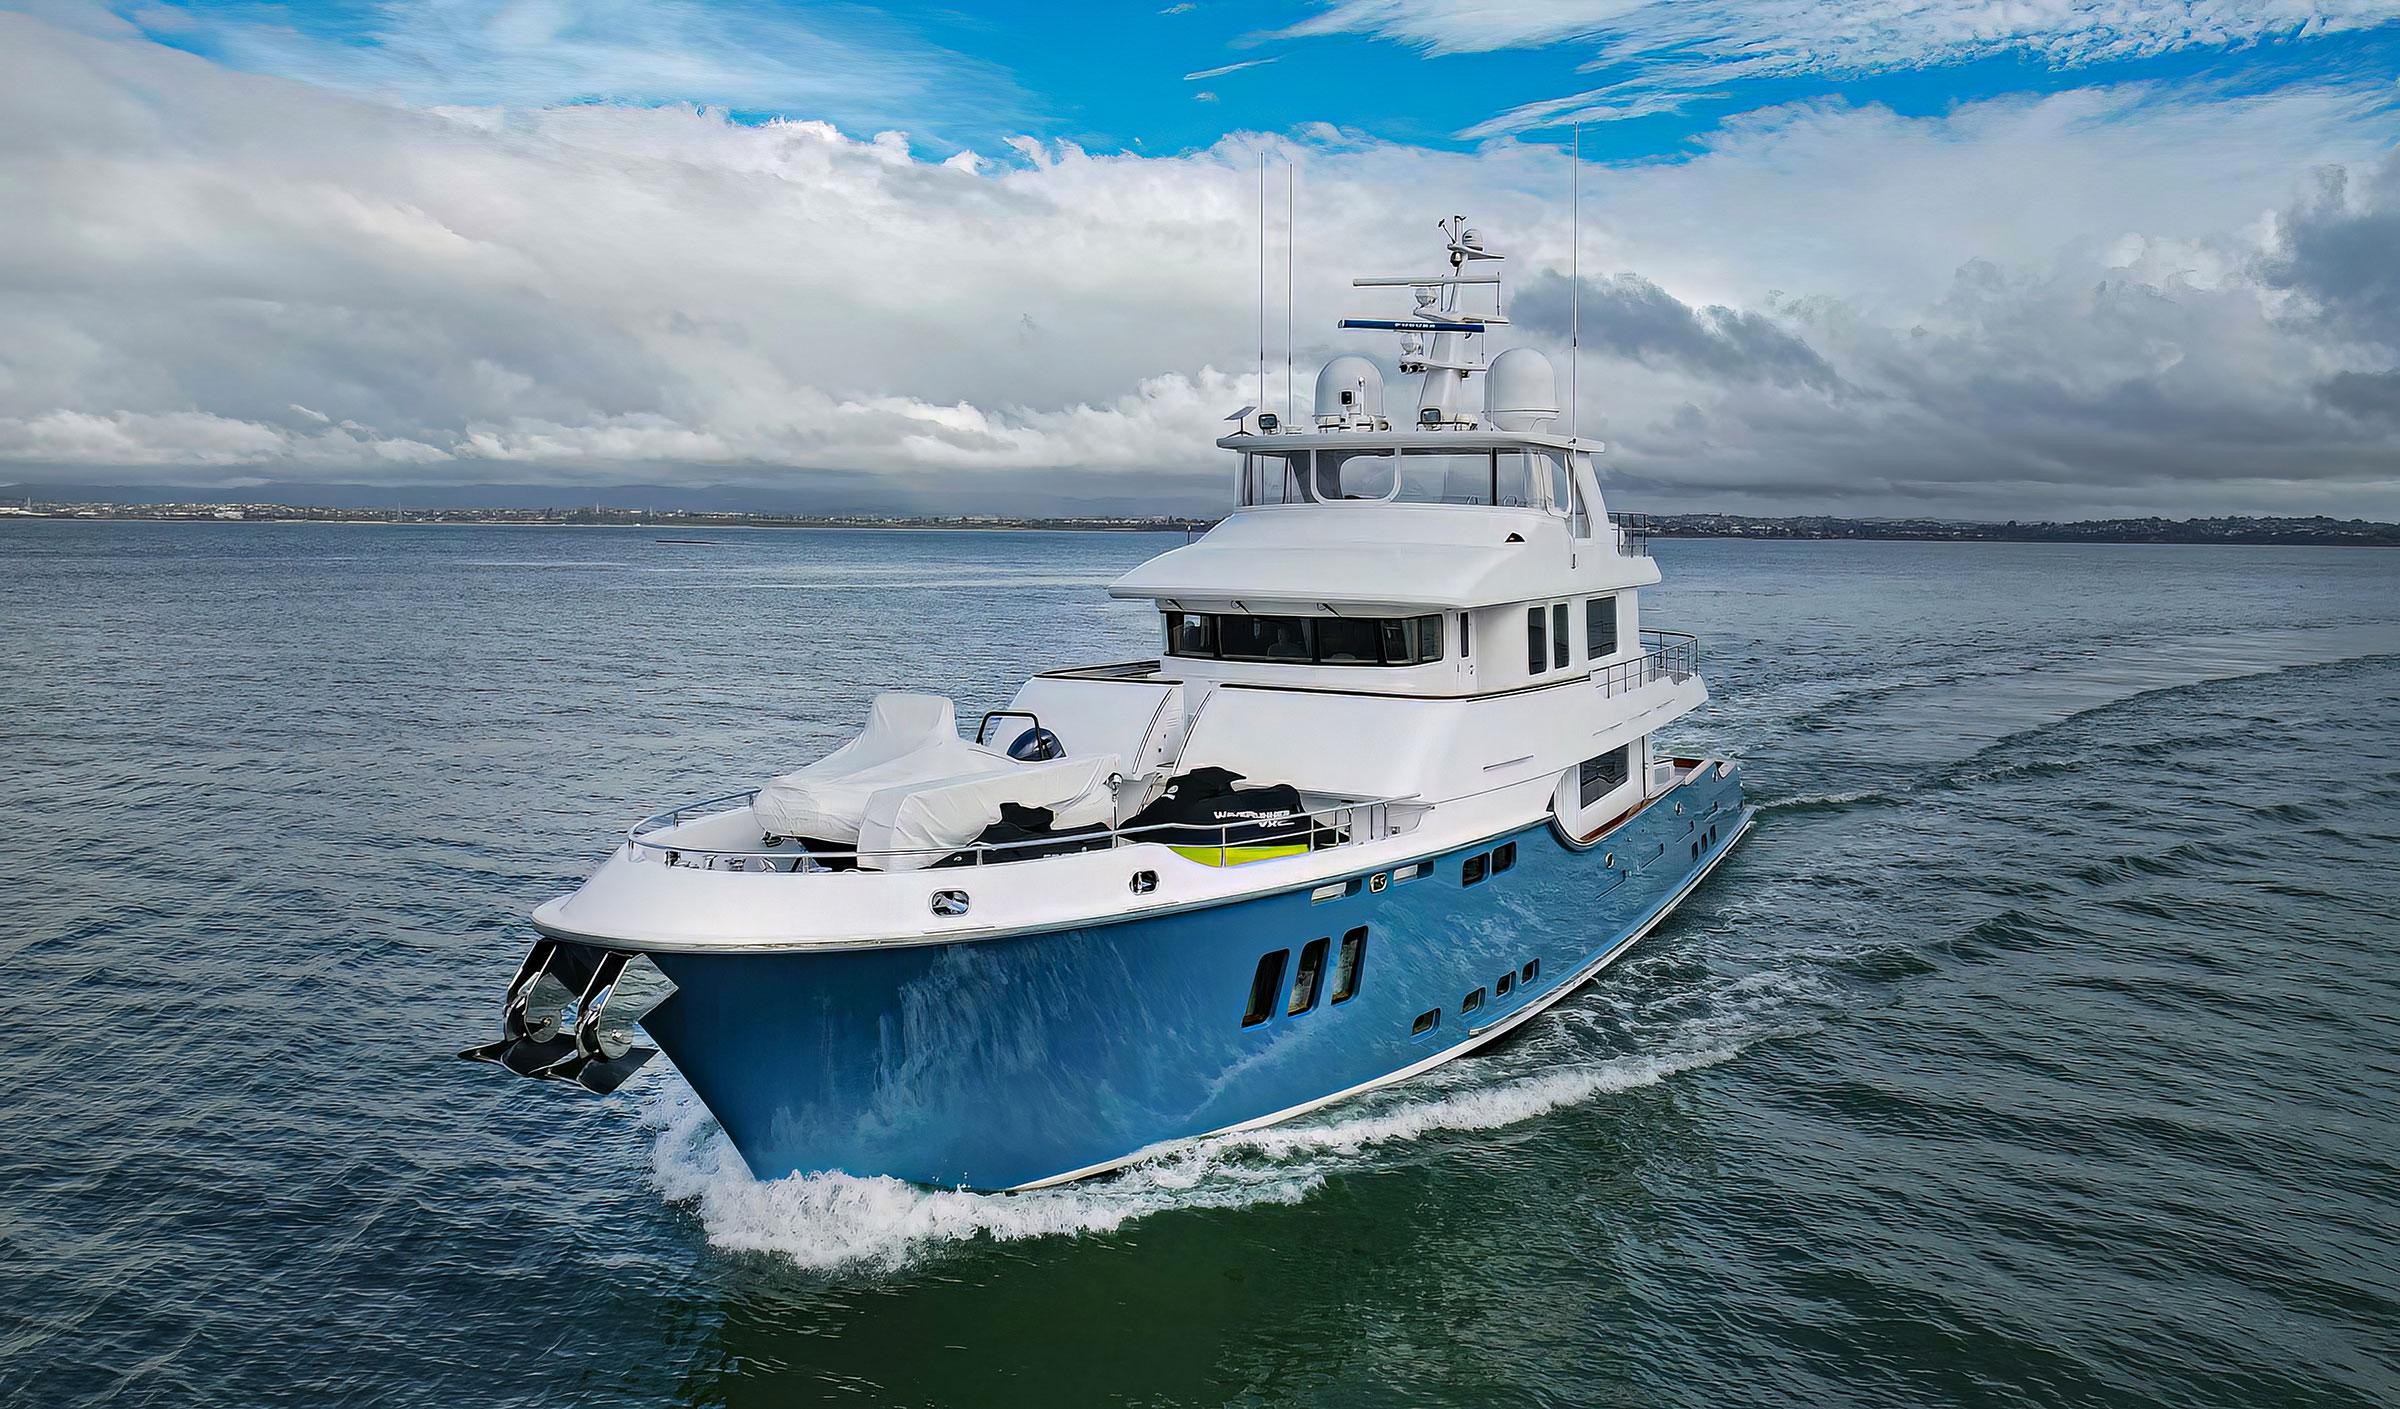 2018 Nordhavn 100, Auckland New Zealand - boats.com